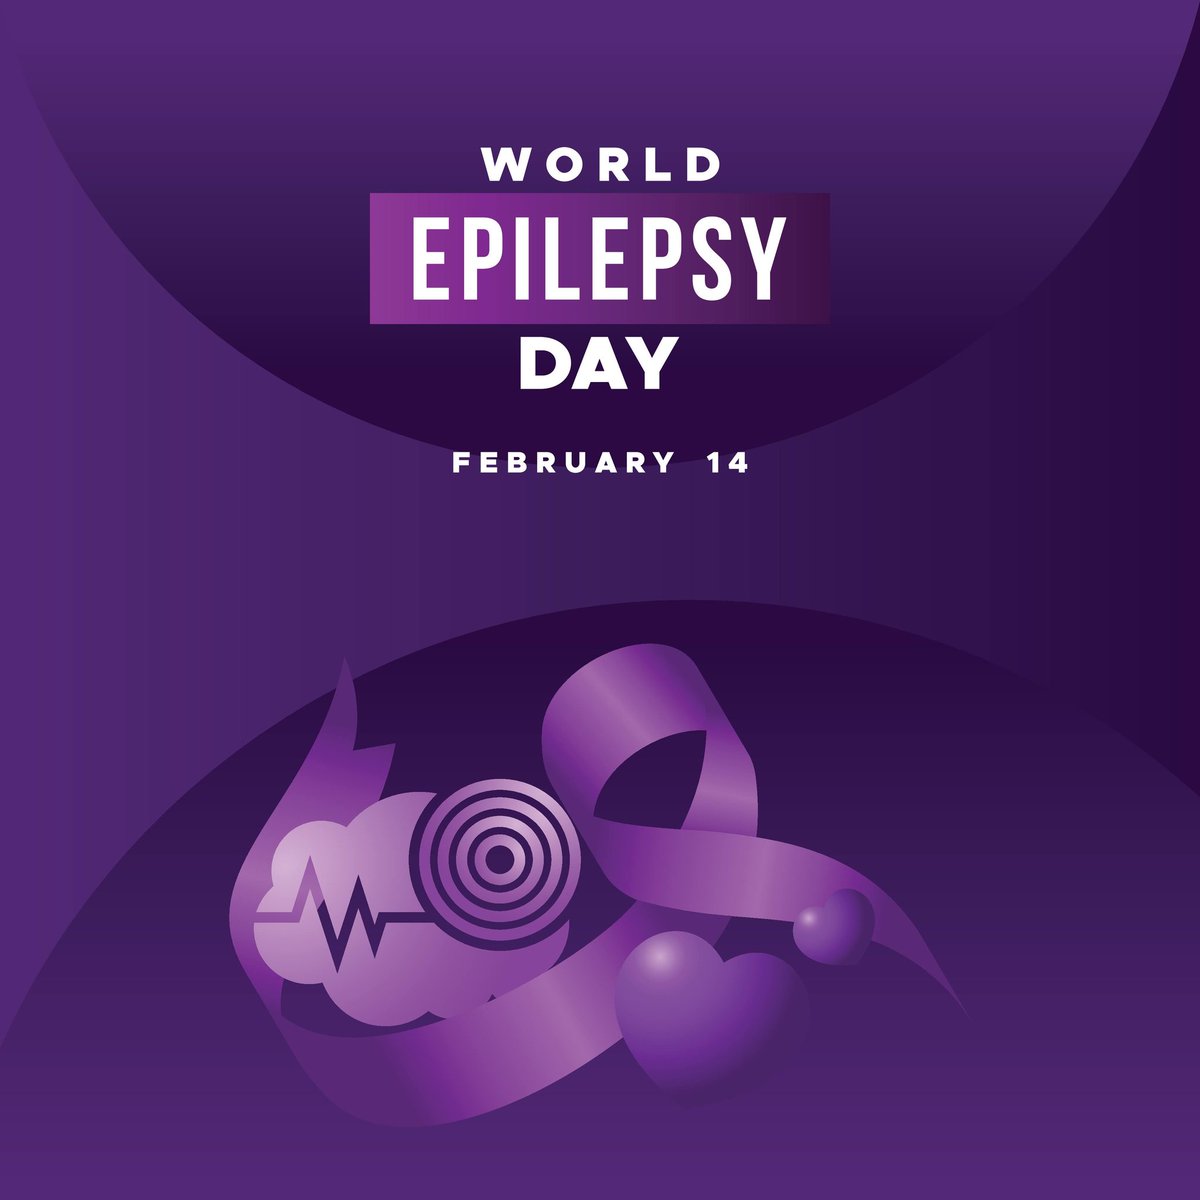 Happy International Epilepsy Day!
#epilepsy #sleep #Sleepstudy #epilepsie #epilepsia #epilepsyawareness #endepilepsy #cureepilepsy #fuckepilepsy #epilepsysucks #epilepsywarrior #epilepsyadvocate #seizures #seizureawareness #fuckseizures #seizuressuck #epilepsyday #epilepsyfighter